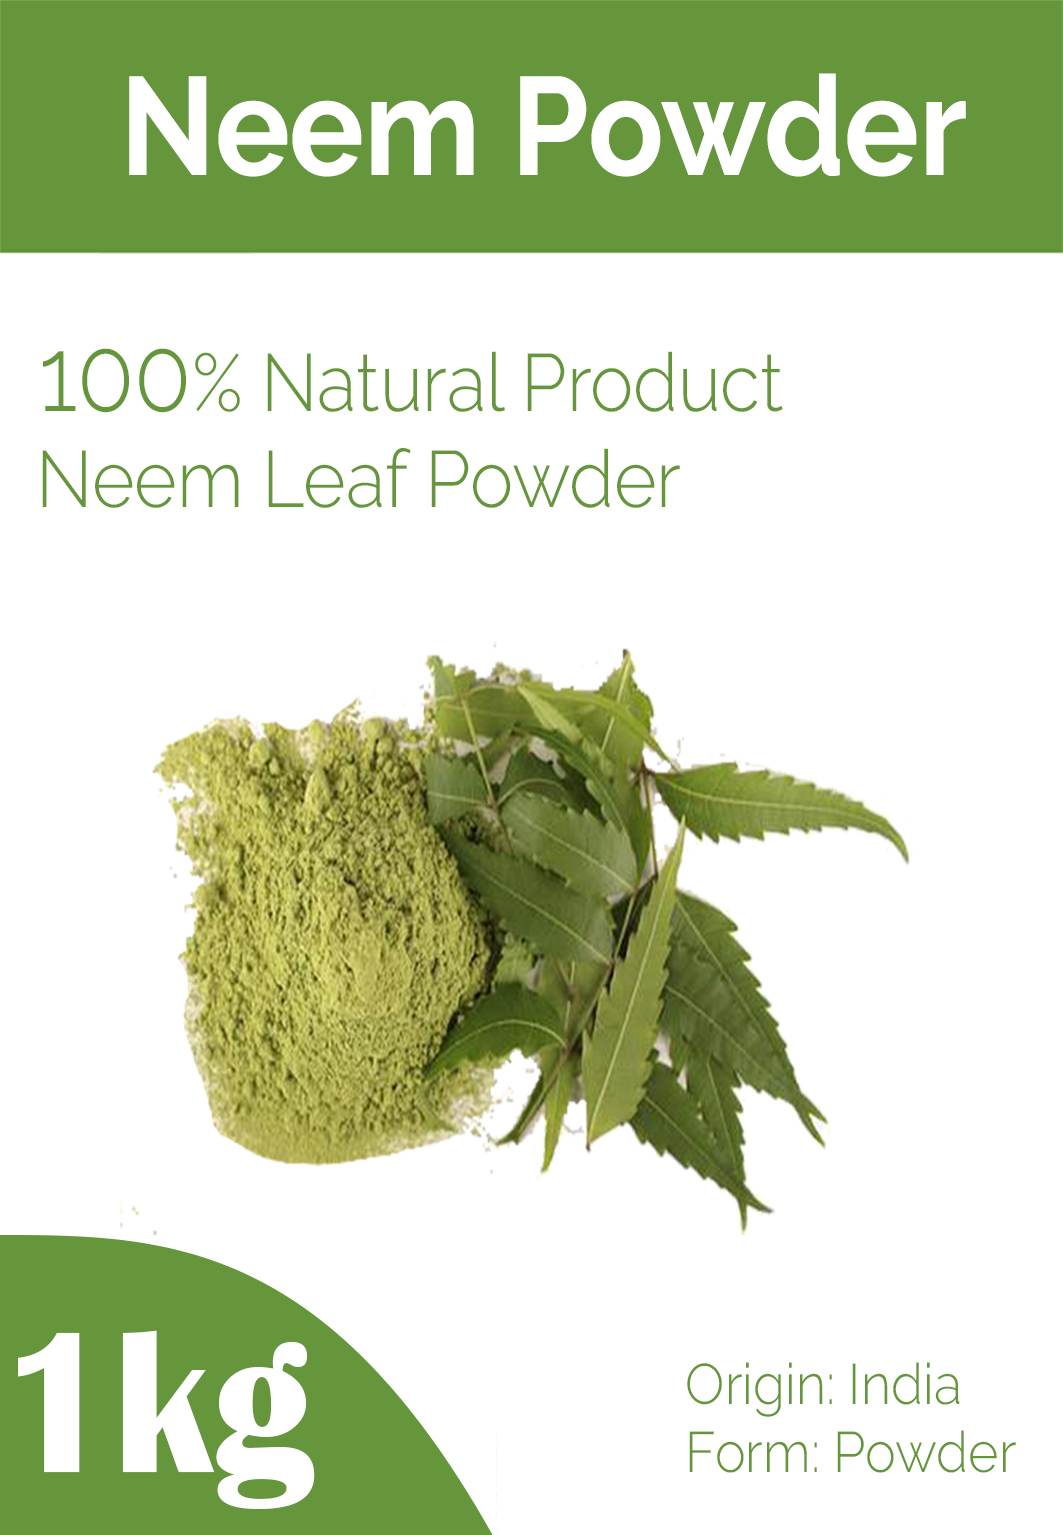 Neem Powder for Hair Growth - DIY Recipes To Make Hair Long